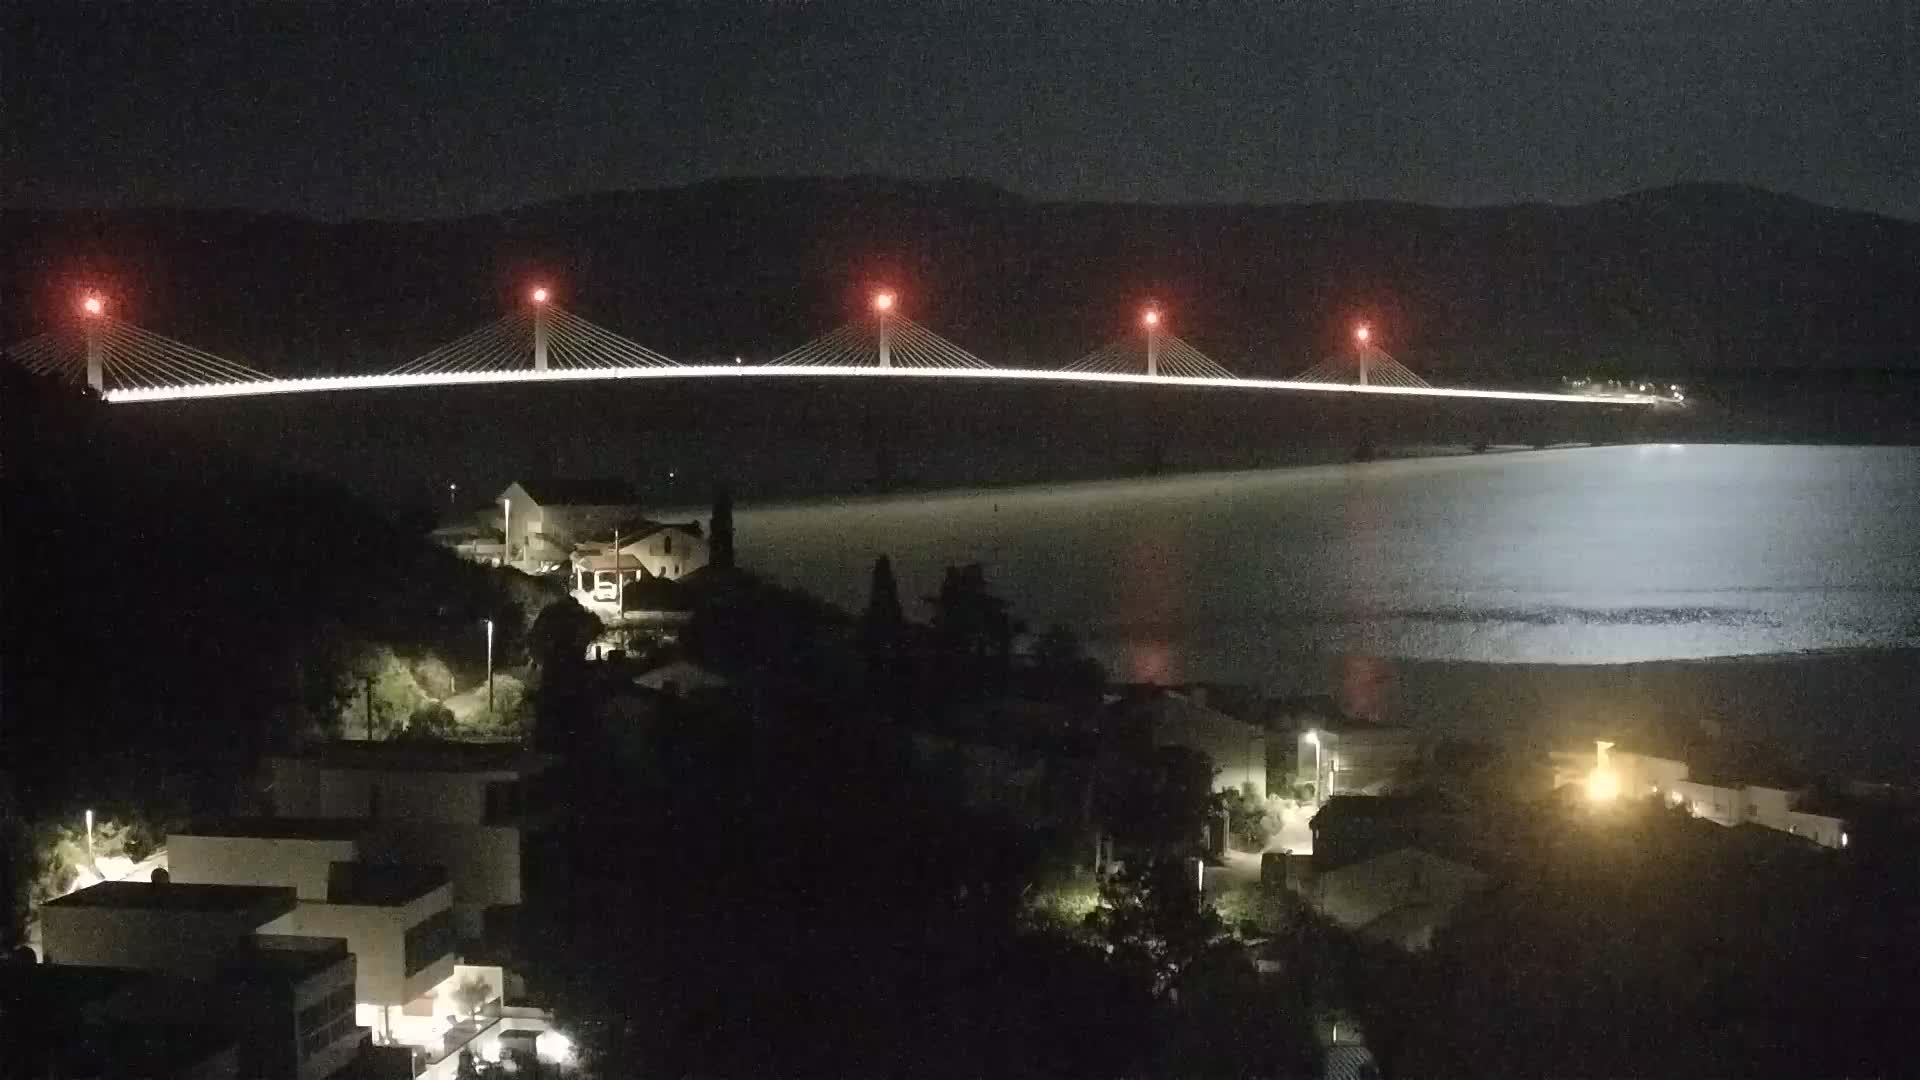 Webcam building Pelješac bridge